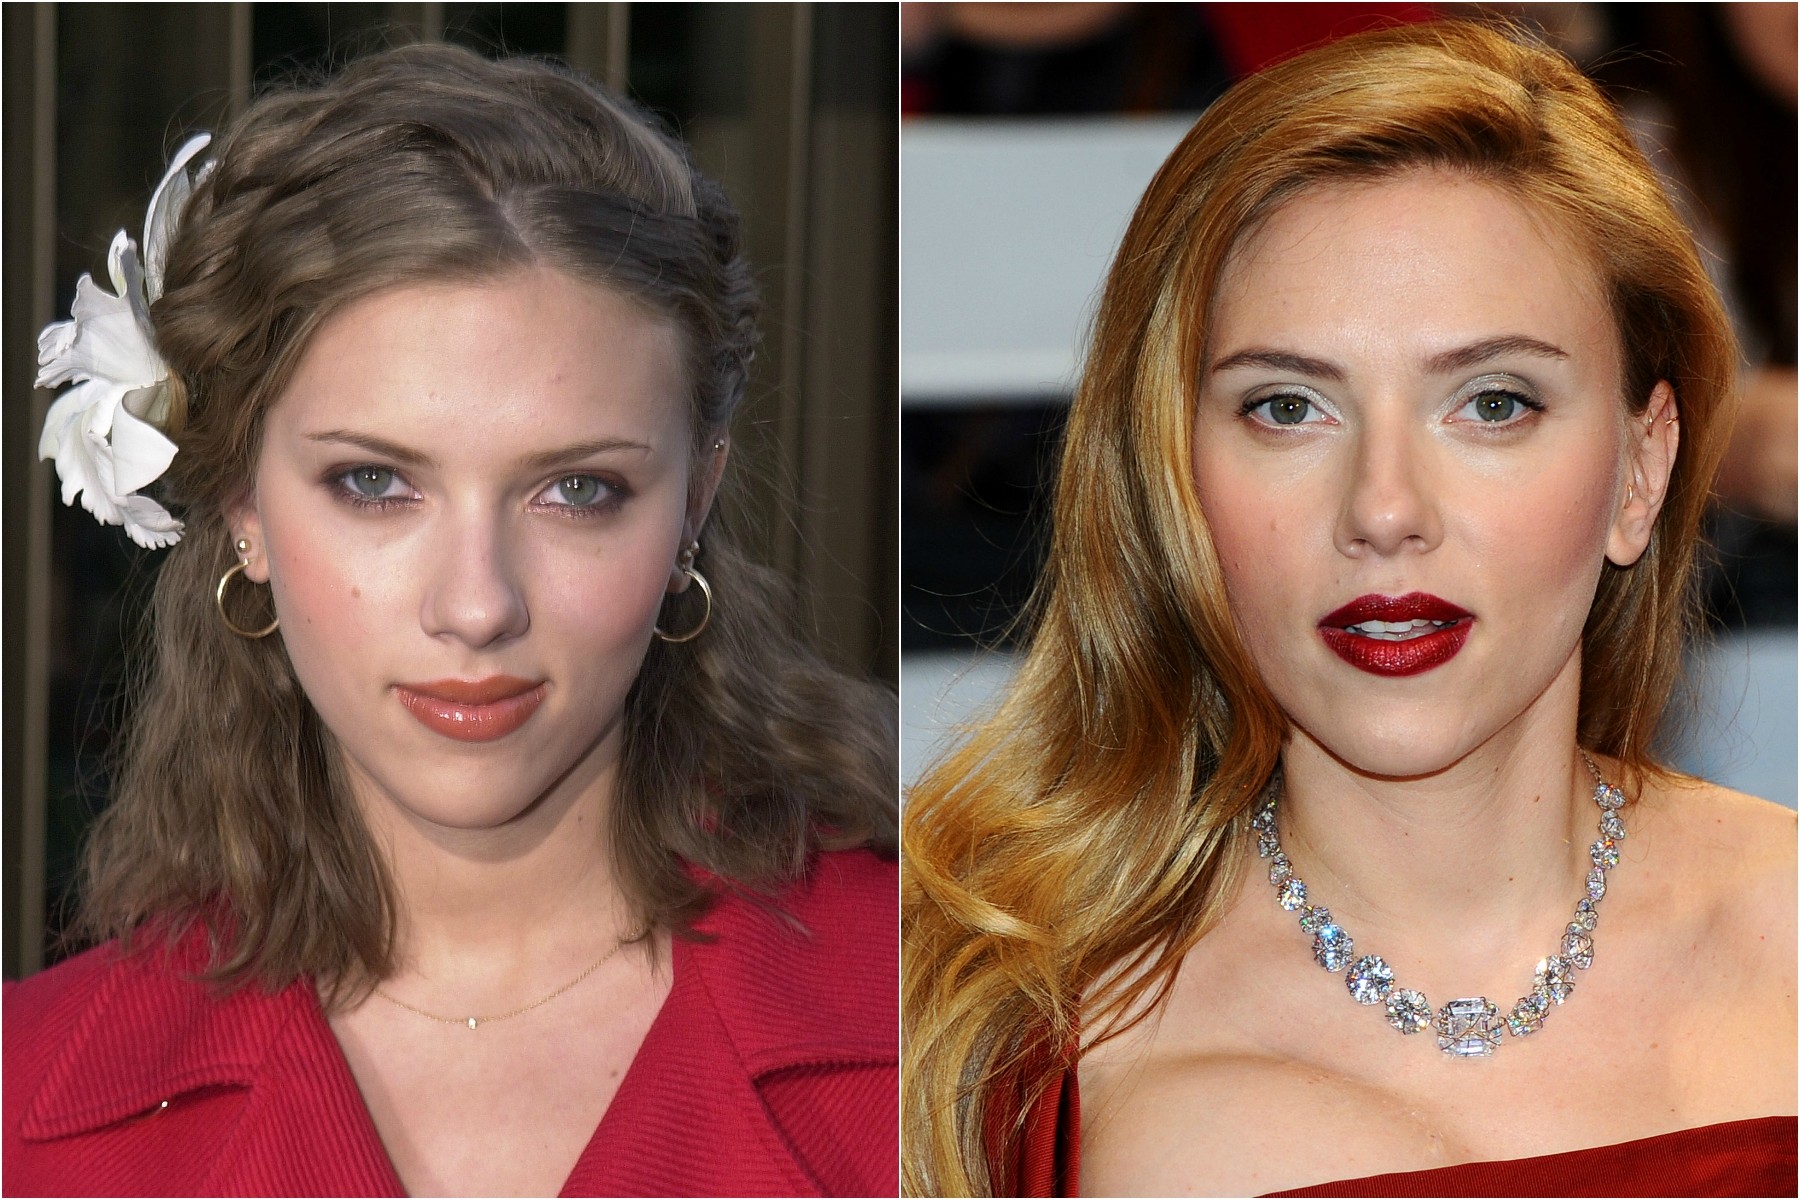 A maioria aprova a mudança de Scarlett. (Foto: Getty Images)